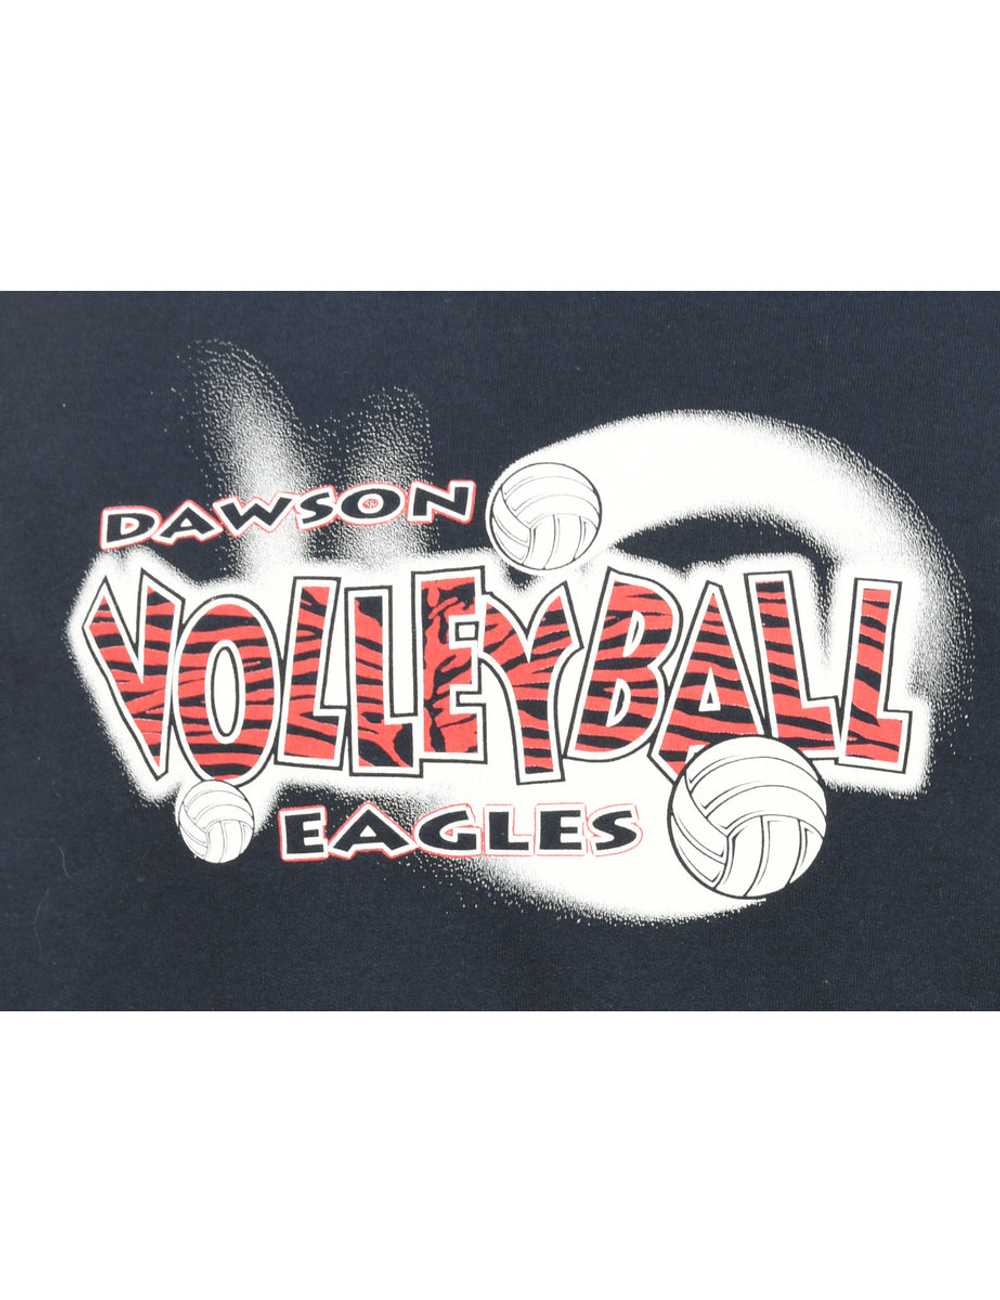 Dawson Volleyball Eagles Printed Sweatshirt - M - image 3